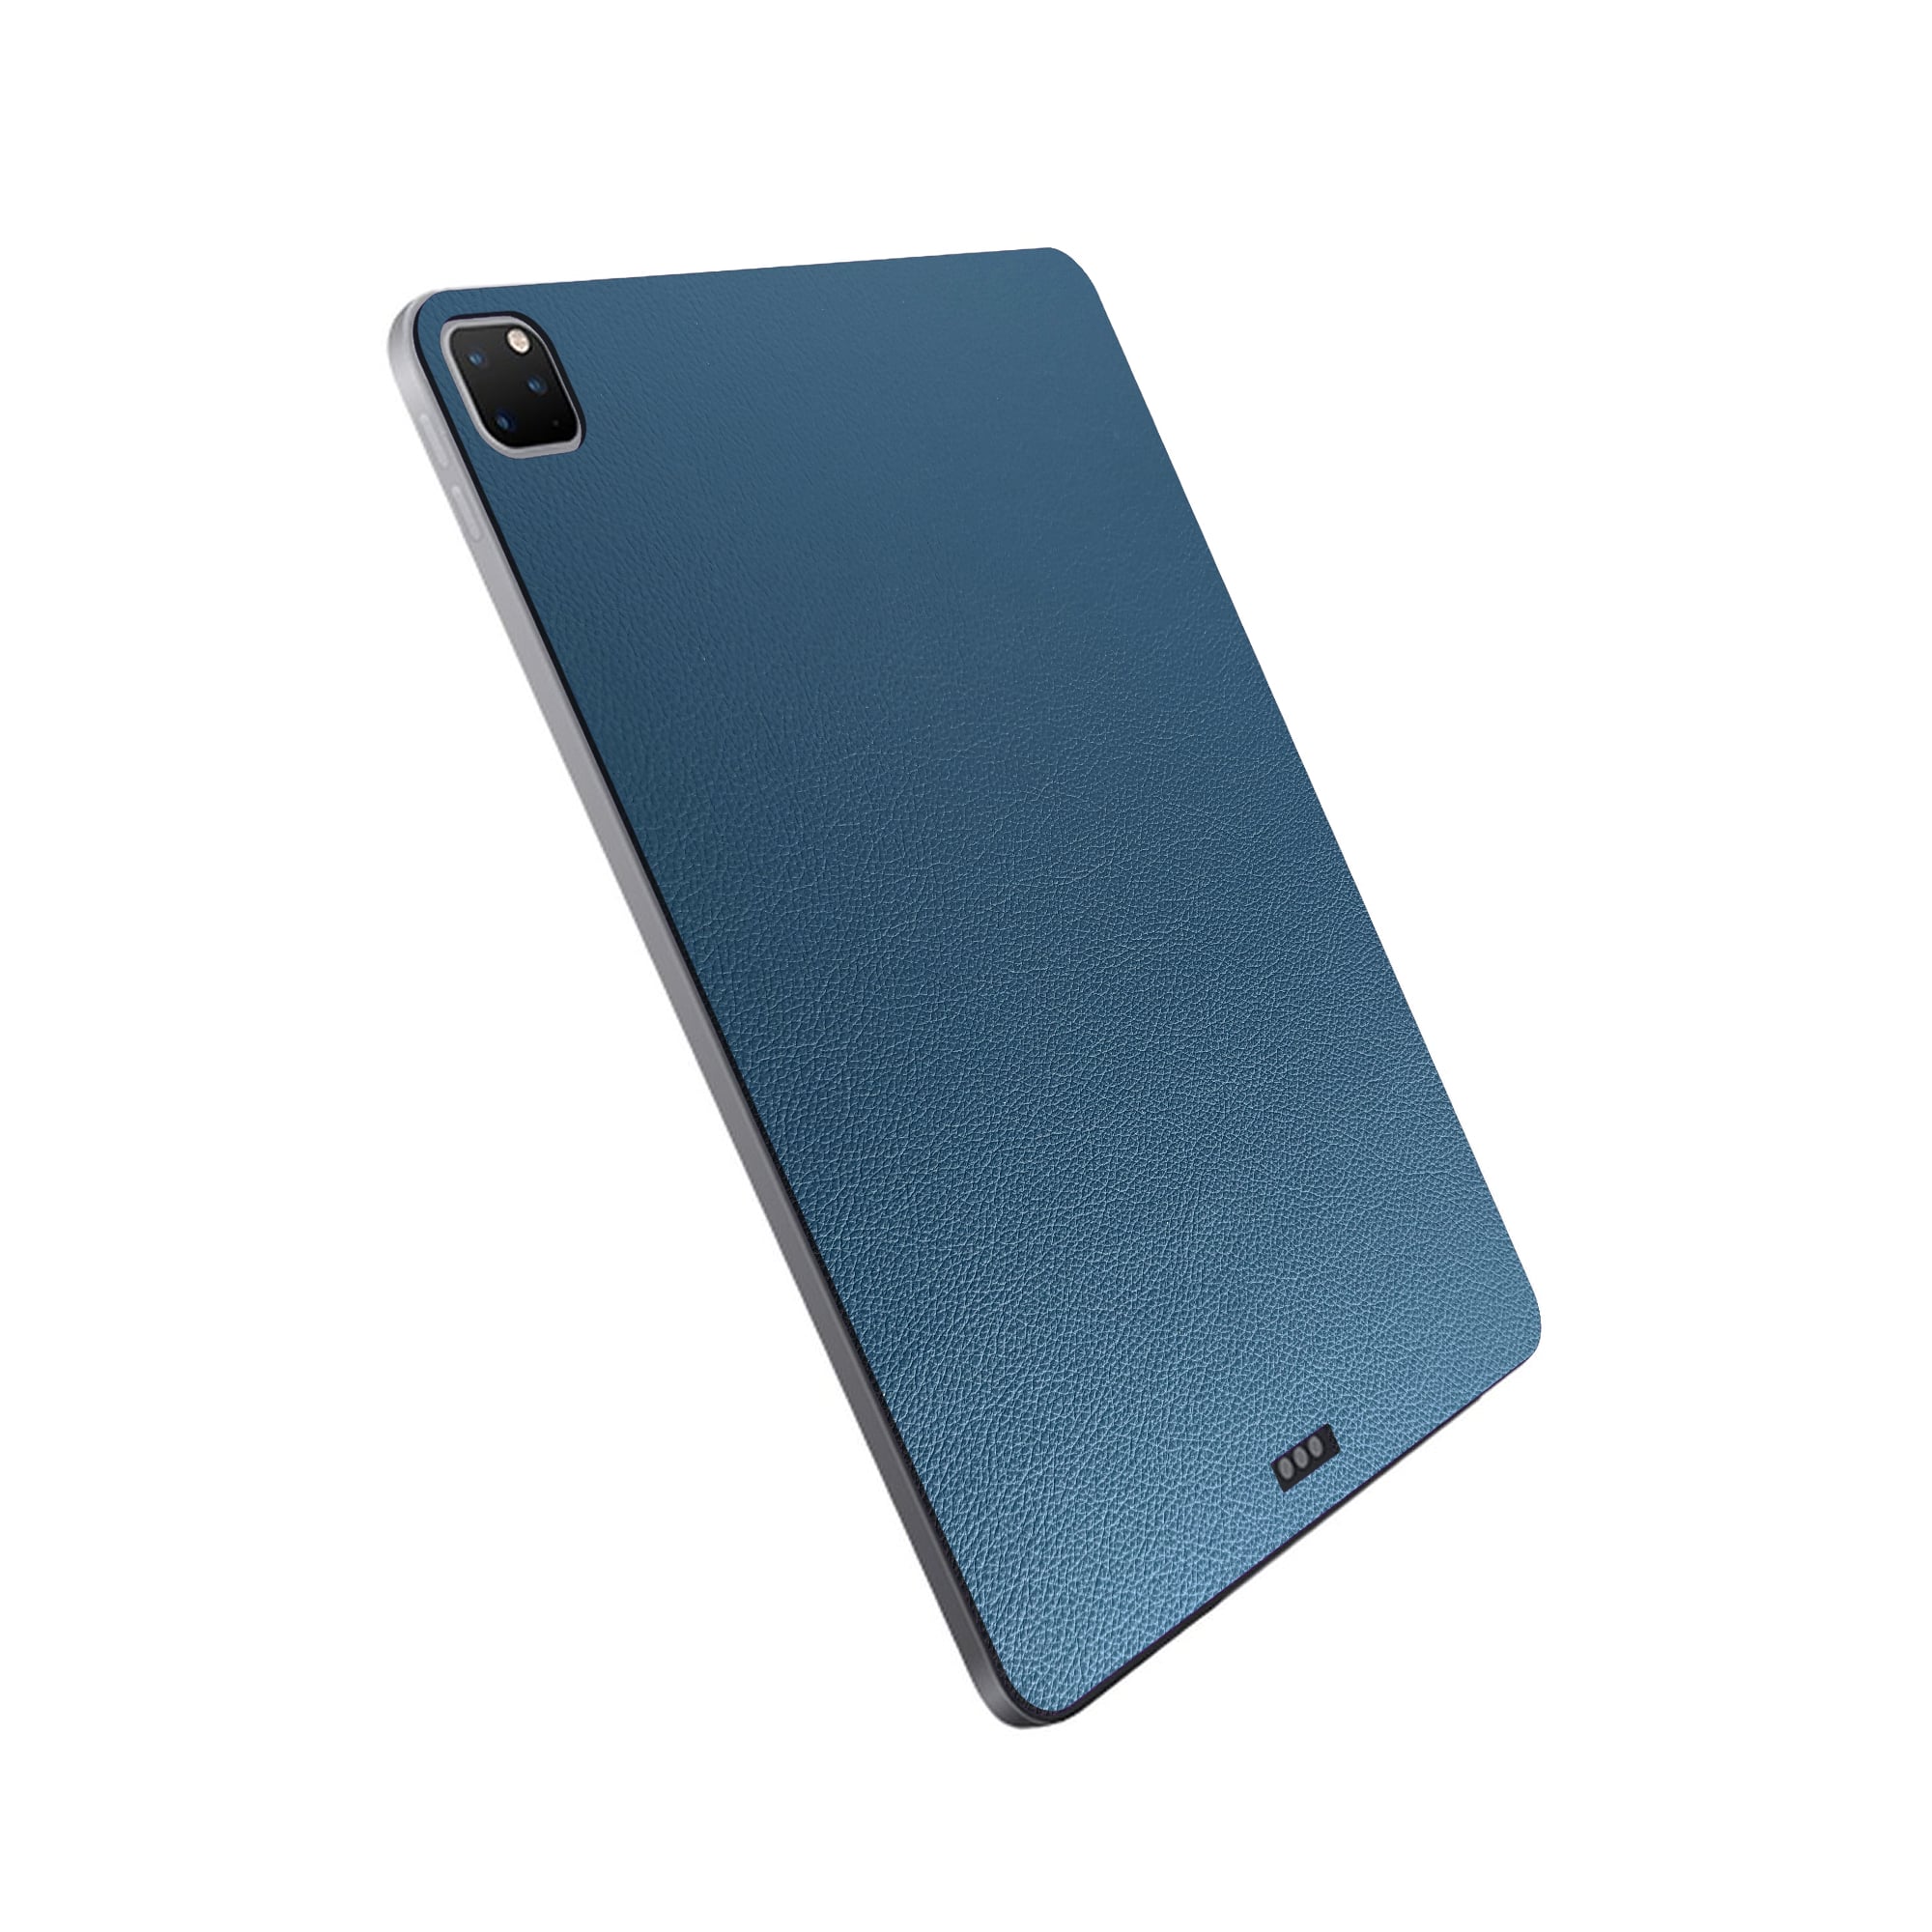 alt: iPad Leather Skin | var:cobalt-blue